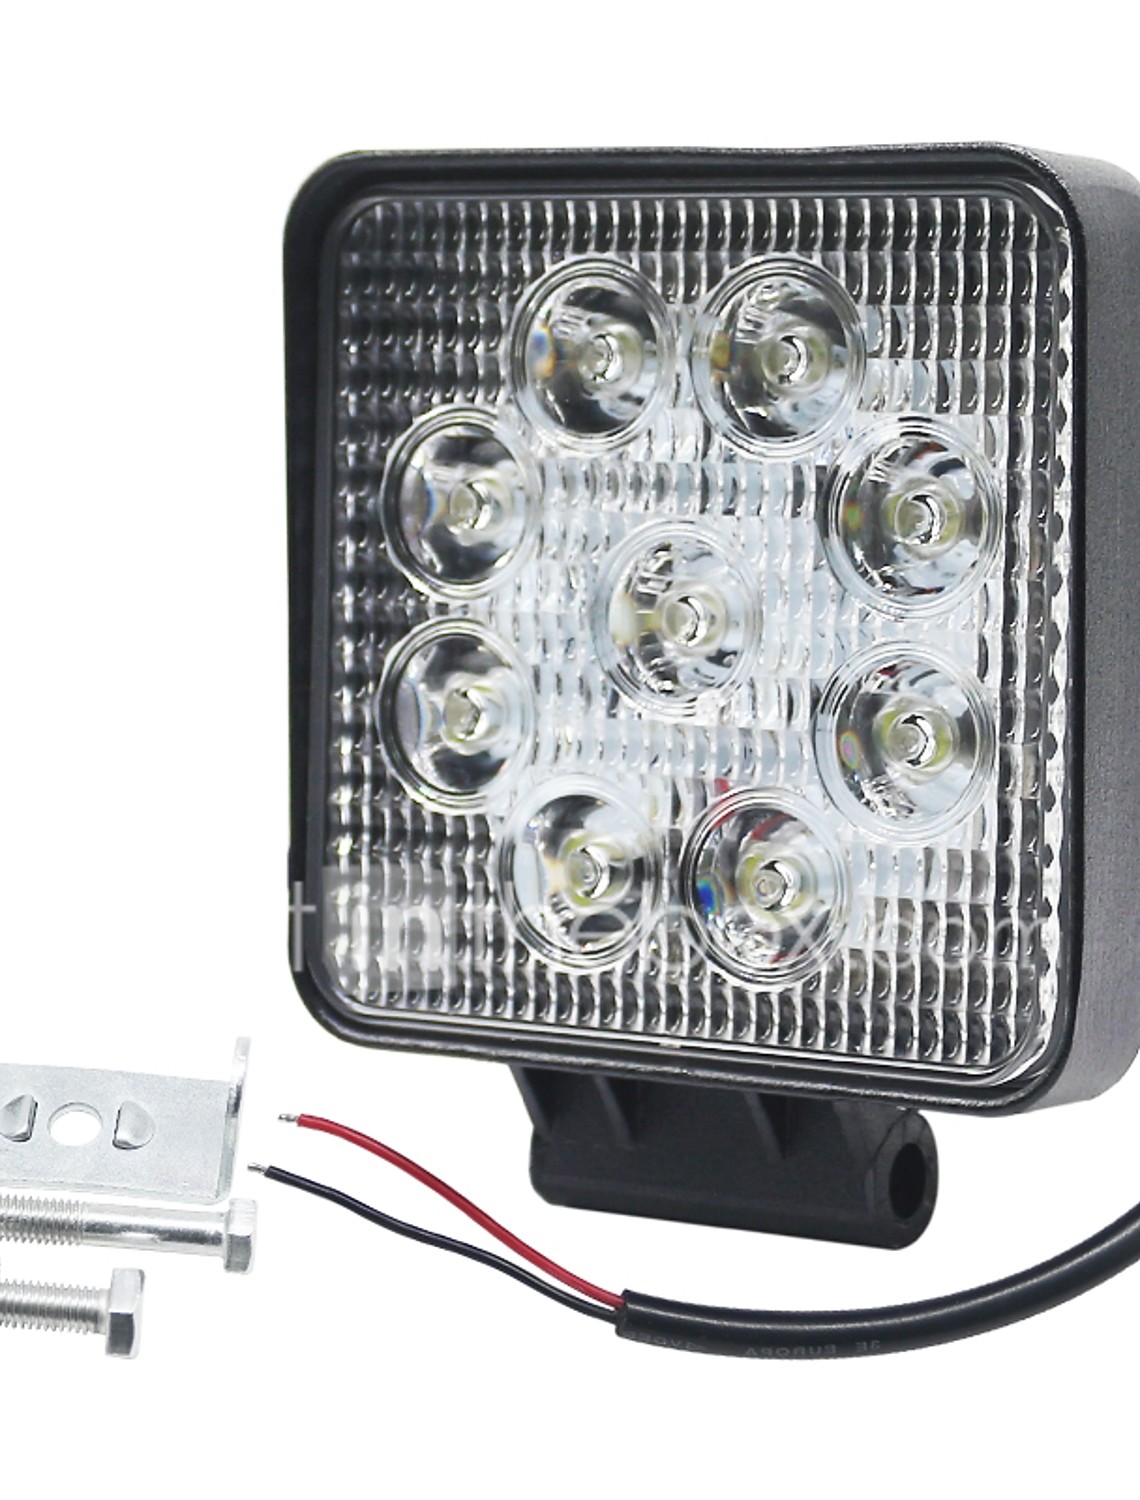 ZIQIAO 2pcs Truck Light Bulbs Tail Light For Universal 